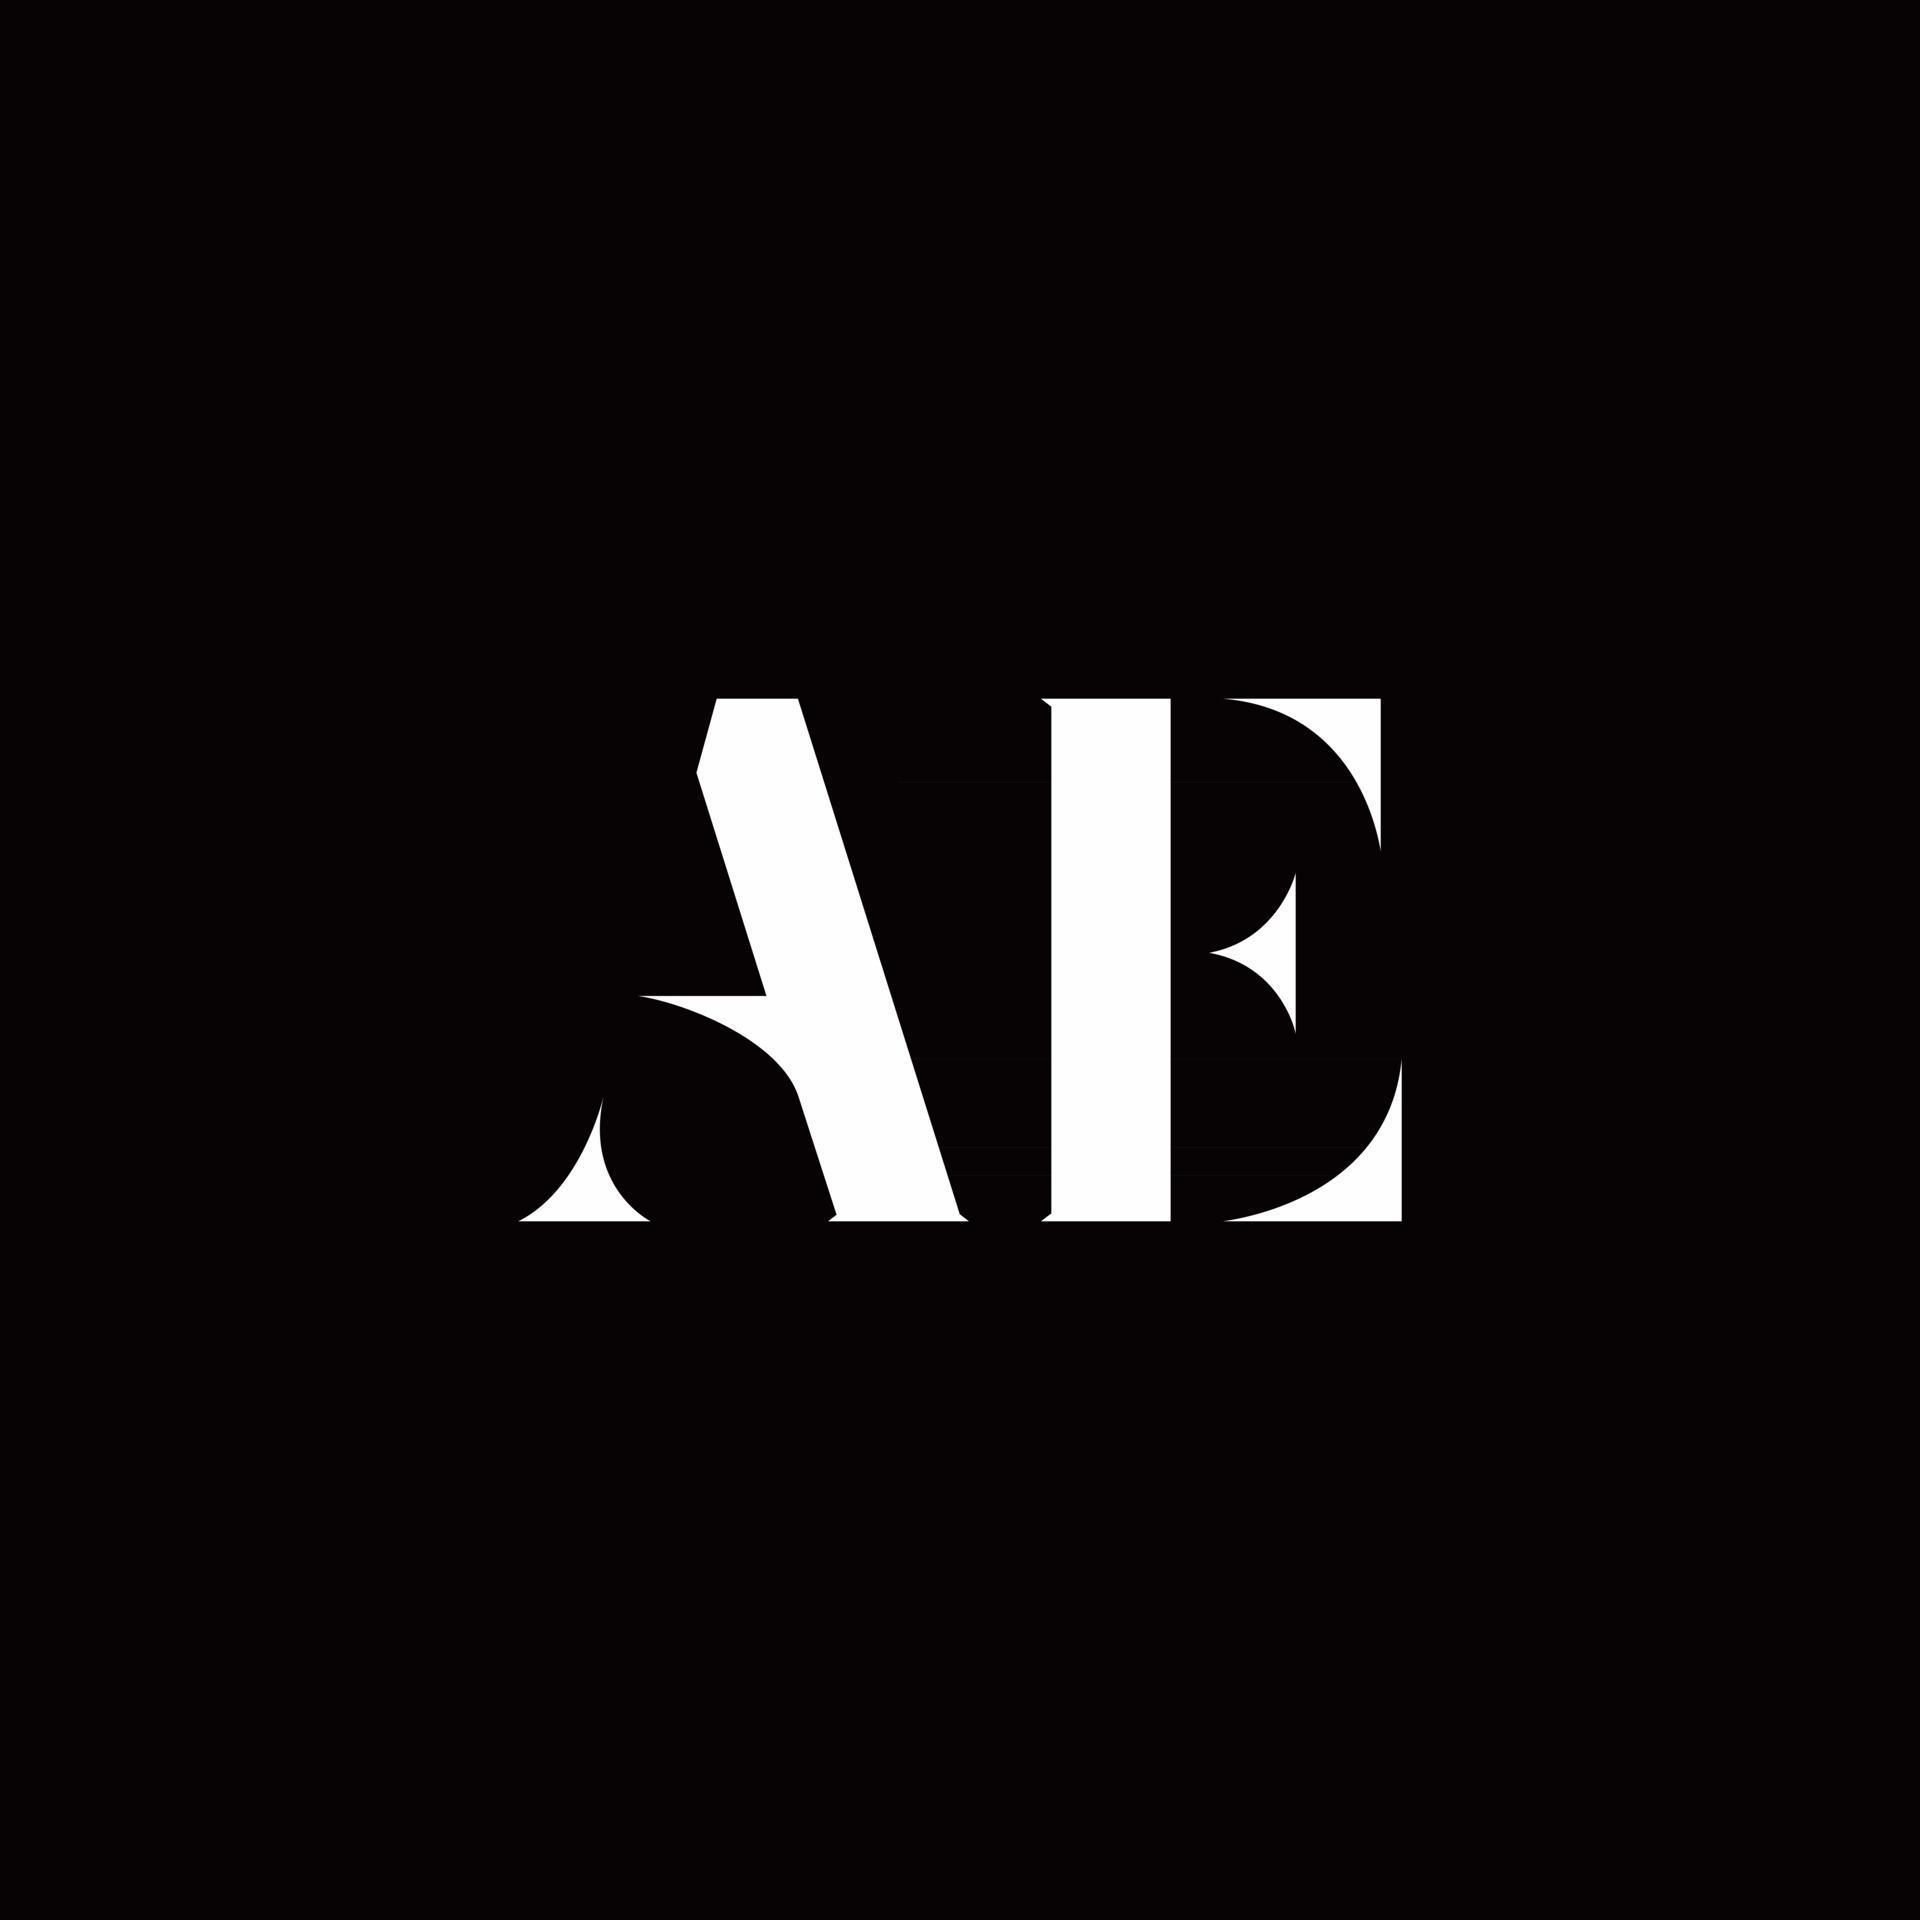 ae-logo-letter-initial-logo-designs-template-2767524-vector-art-at-vecteezy